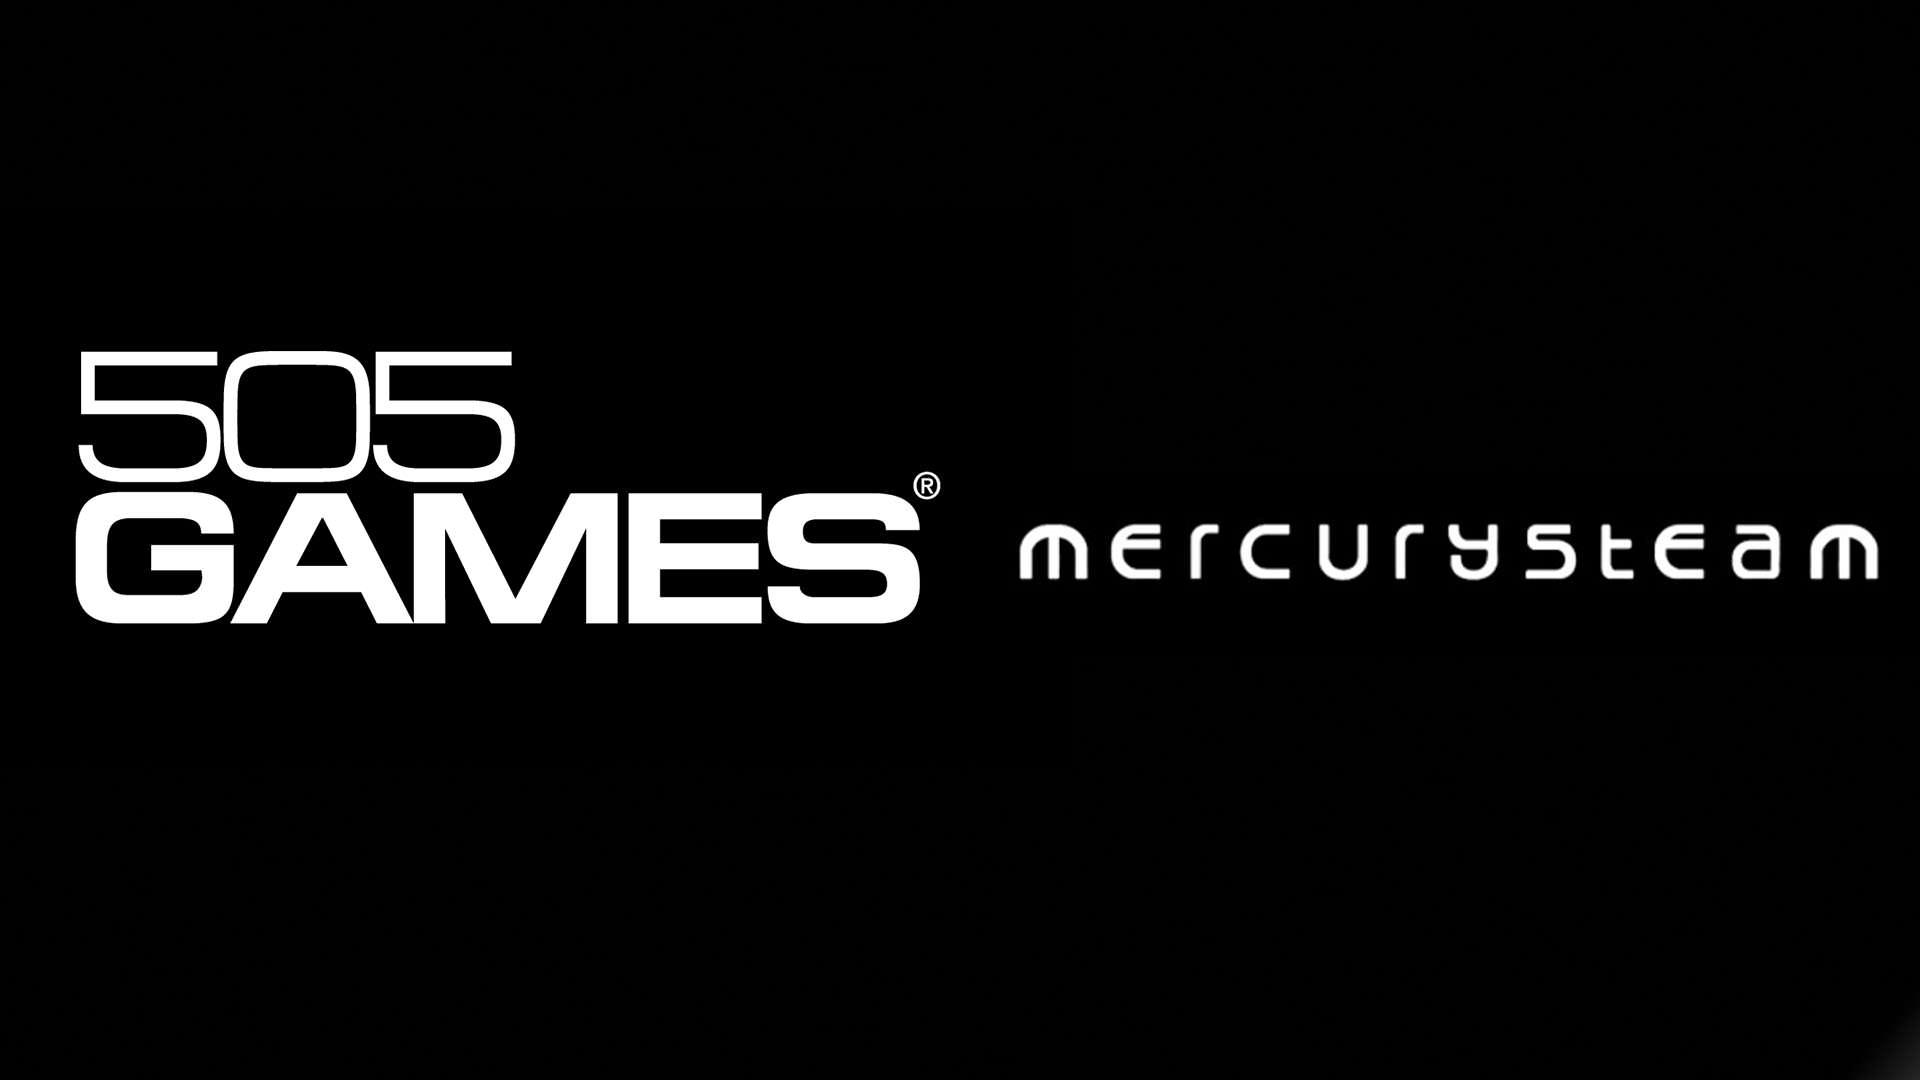 لوگو 505 Games و استودیوی MercurySteam